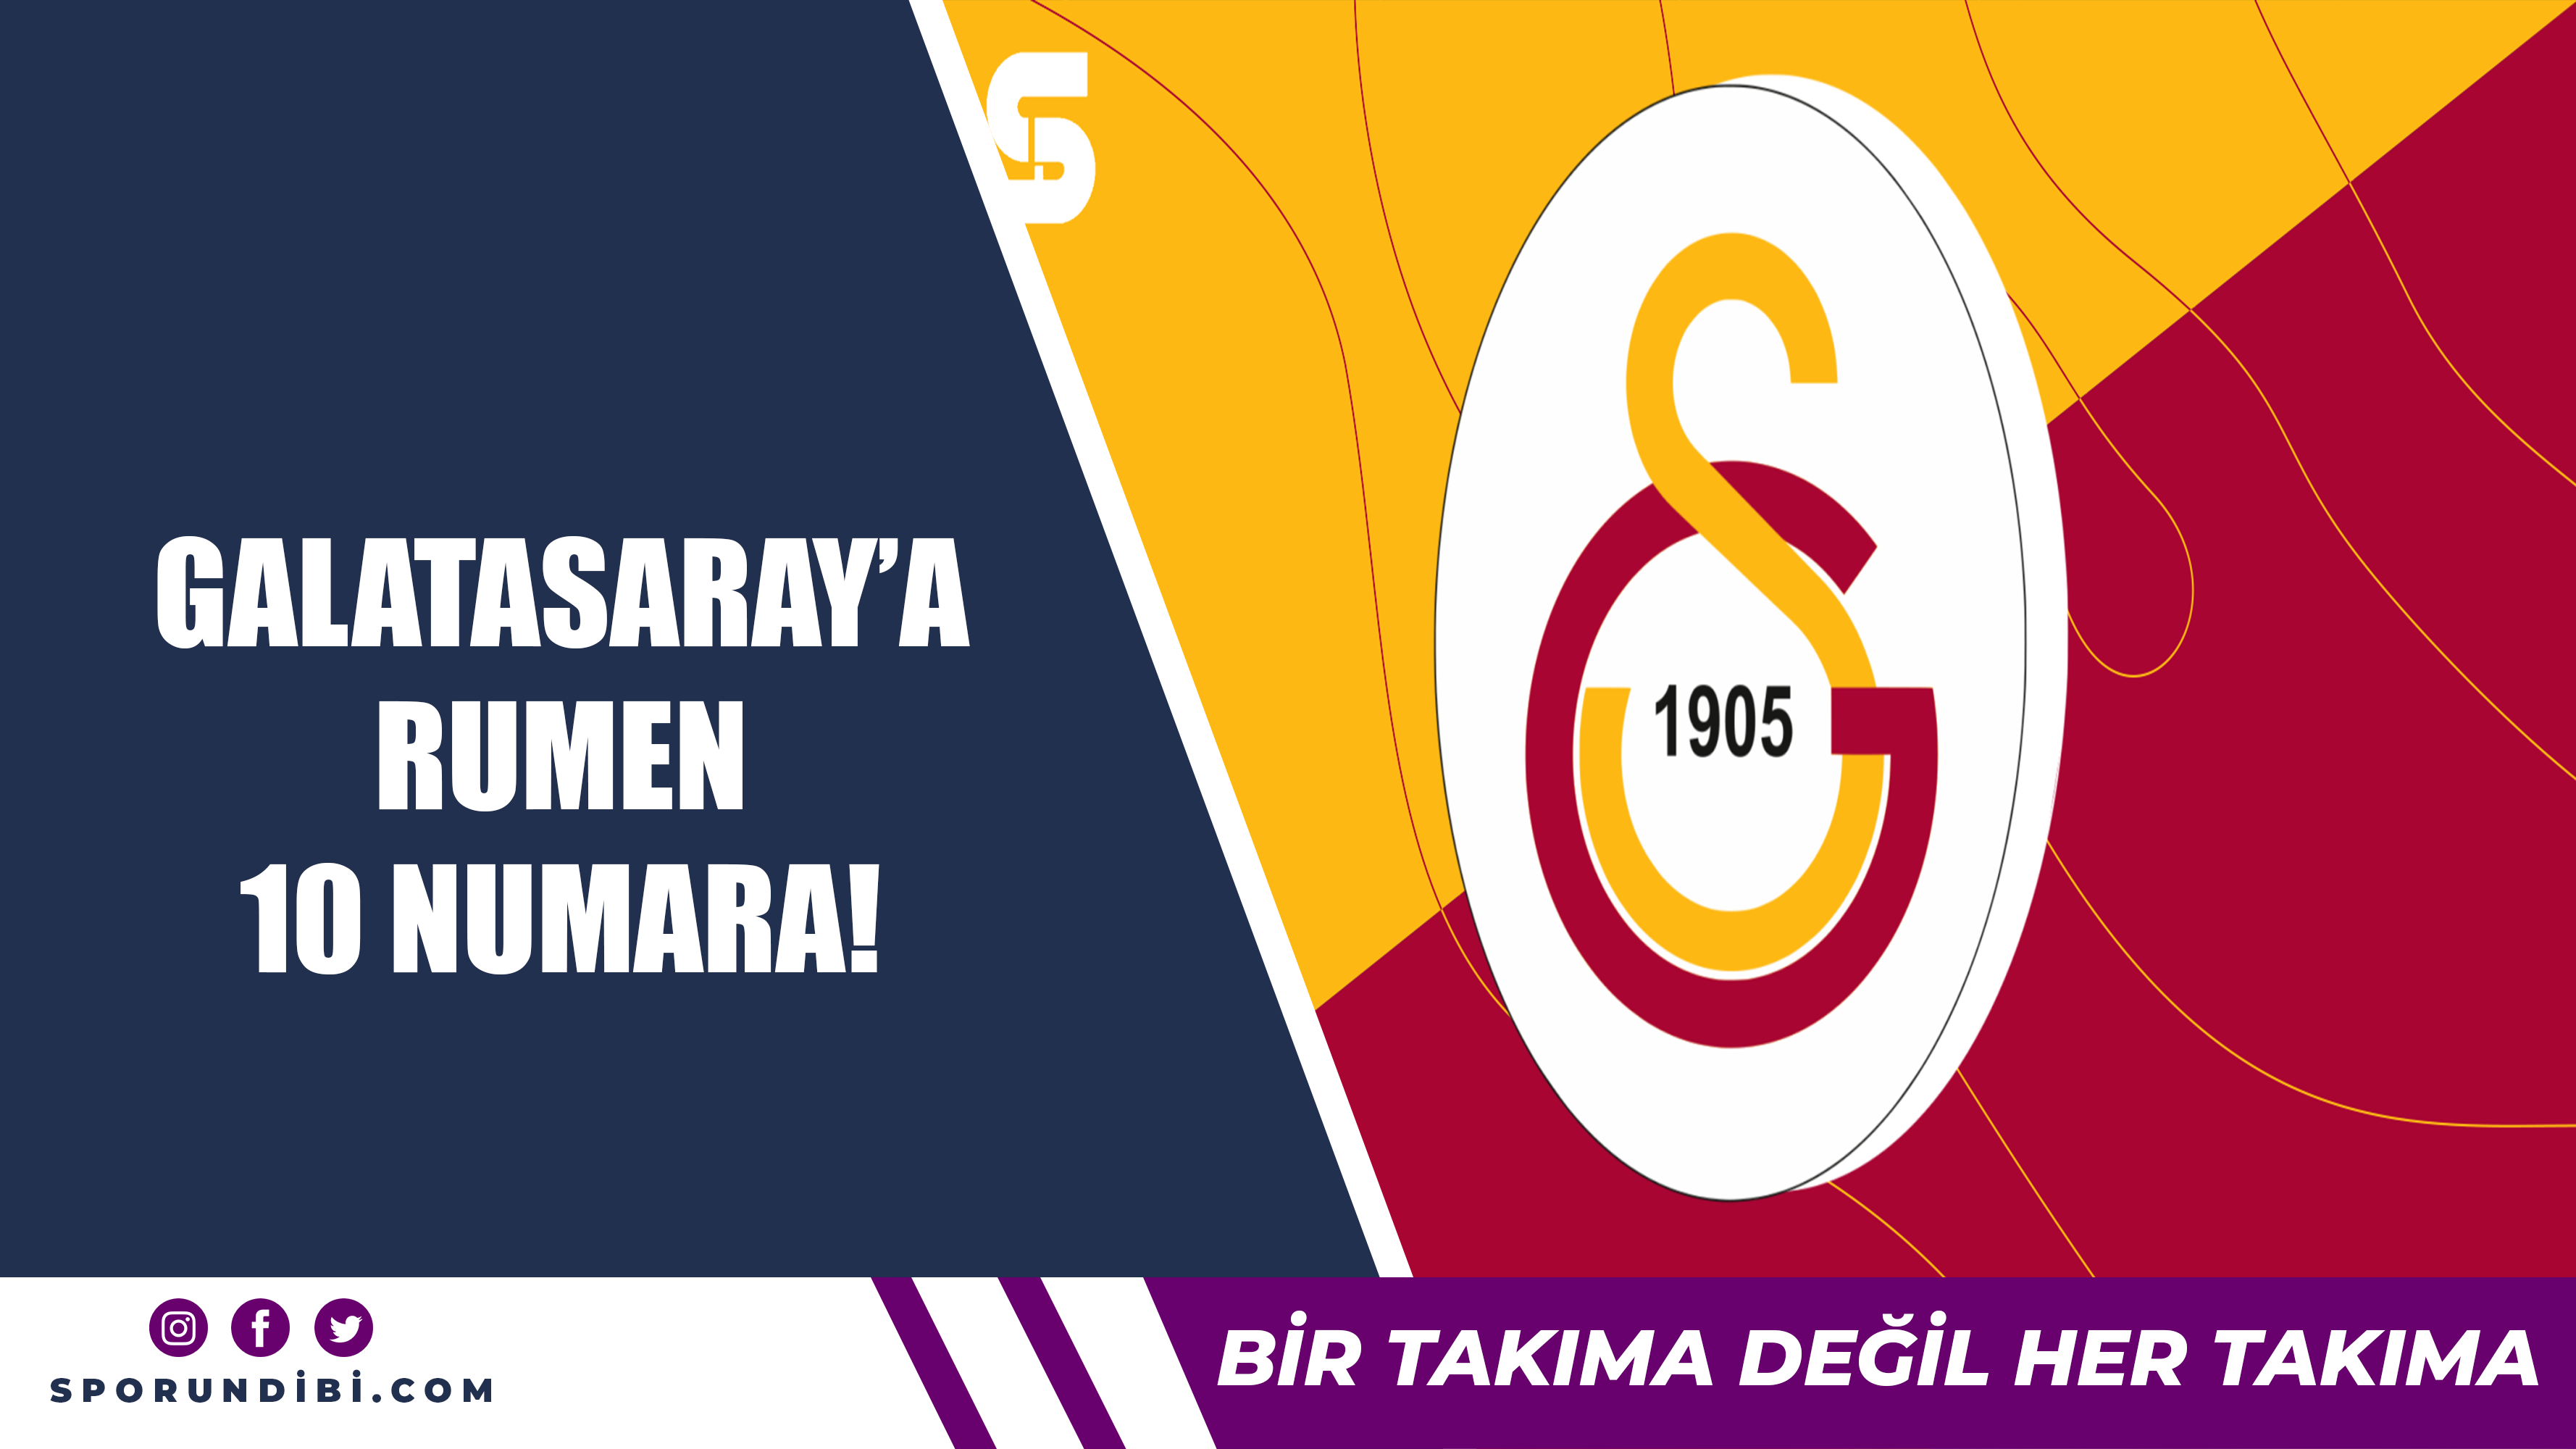 Galatasaray'a Rumen 10 numara!